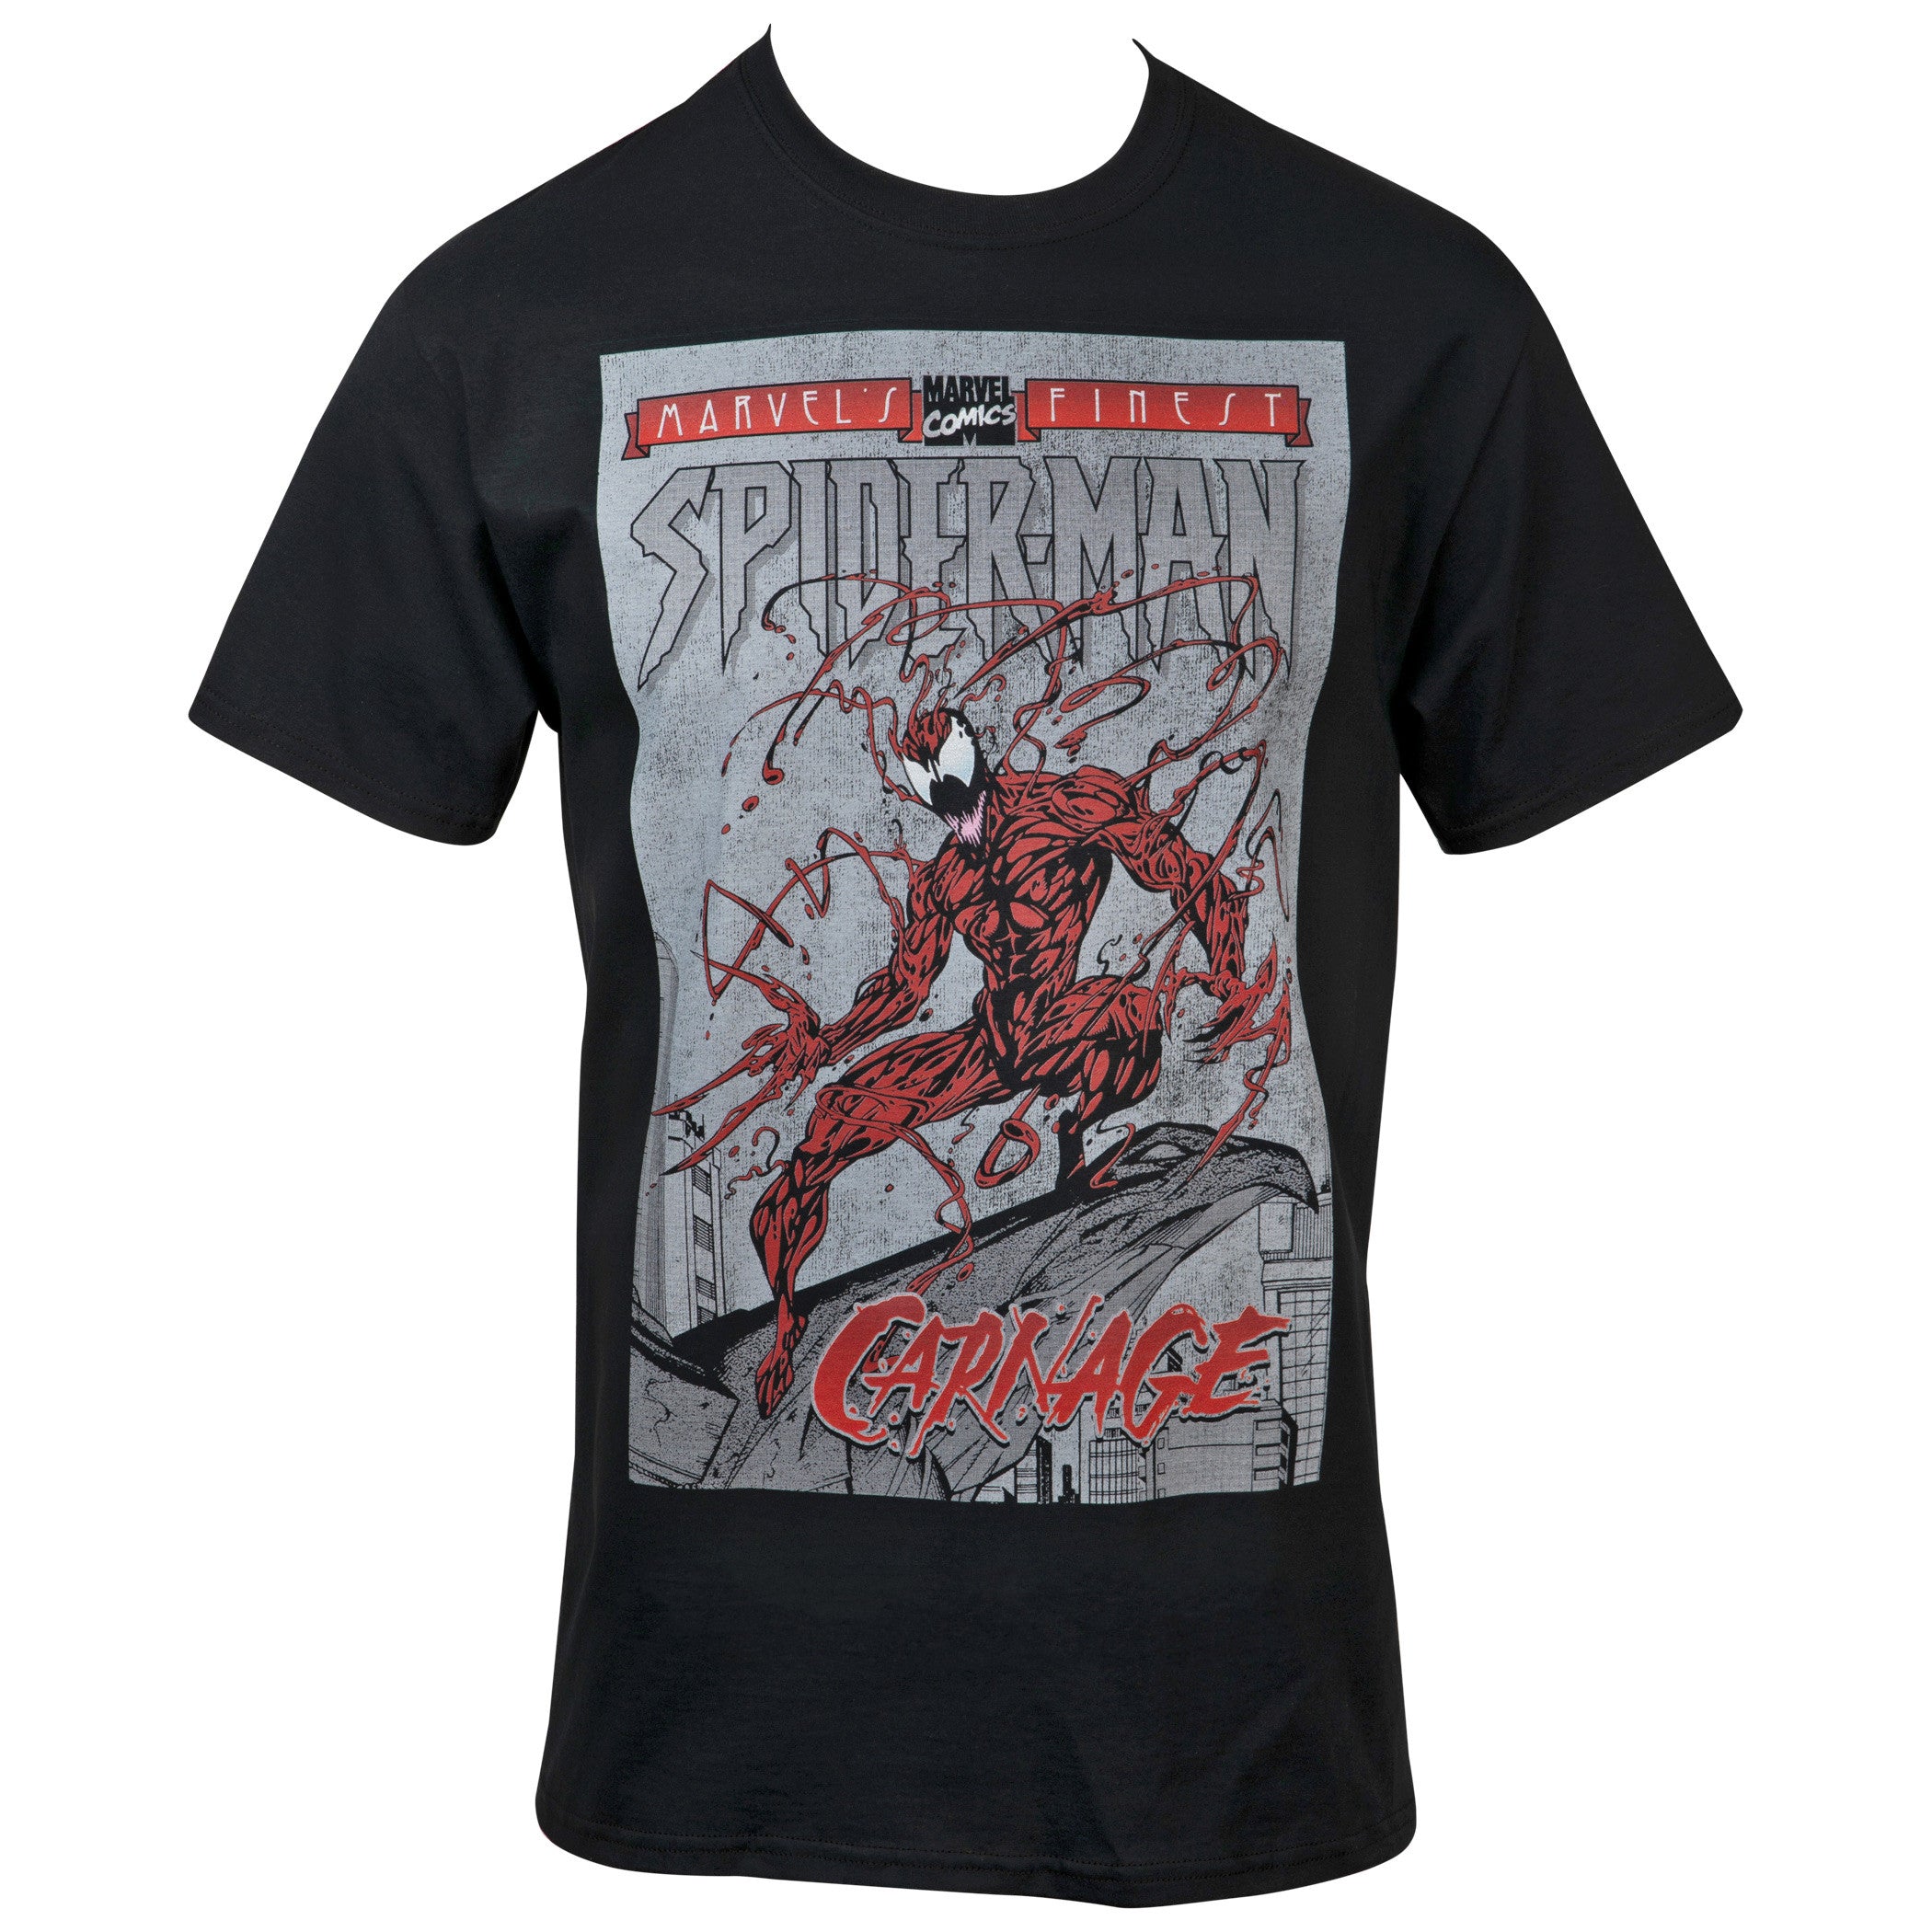 title:Marvel's Comics Finest Carnage Comic Cover T-Shirt;color:Black